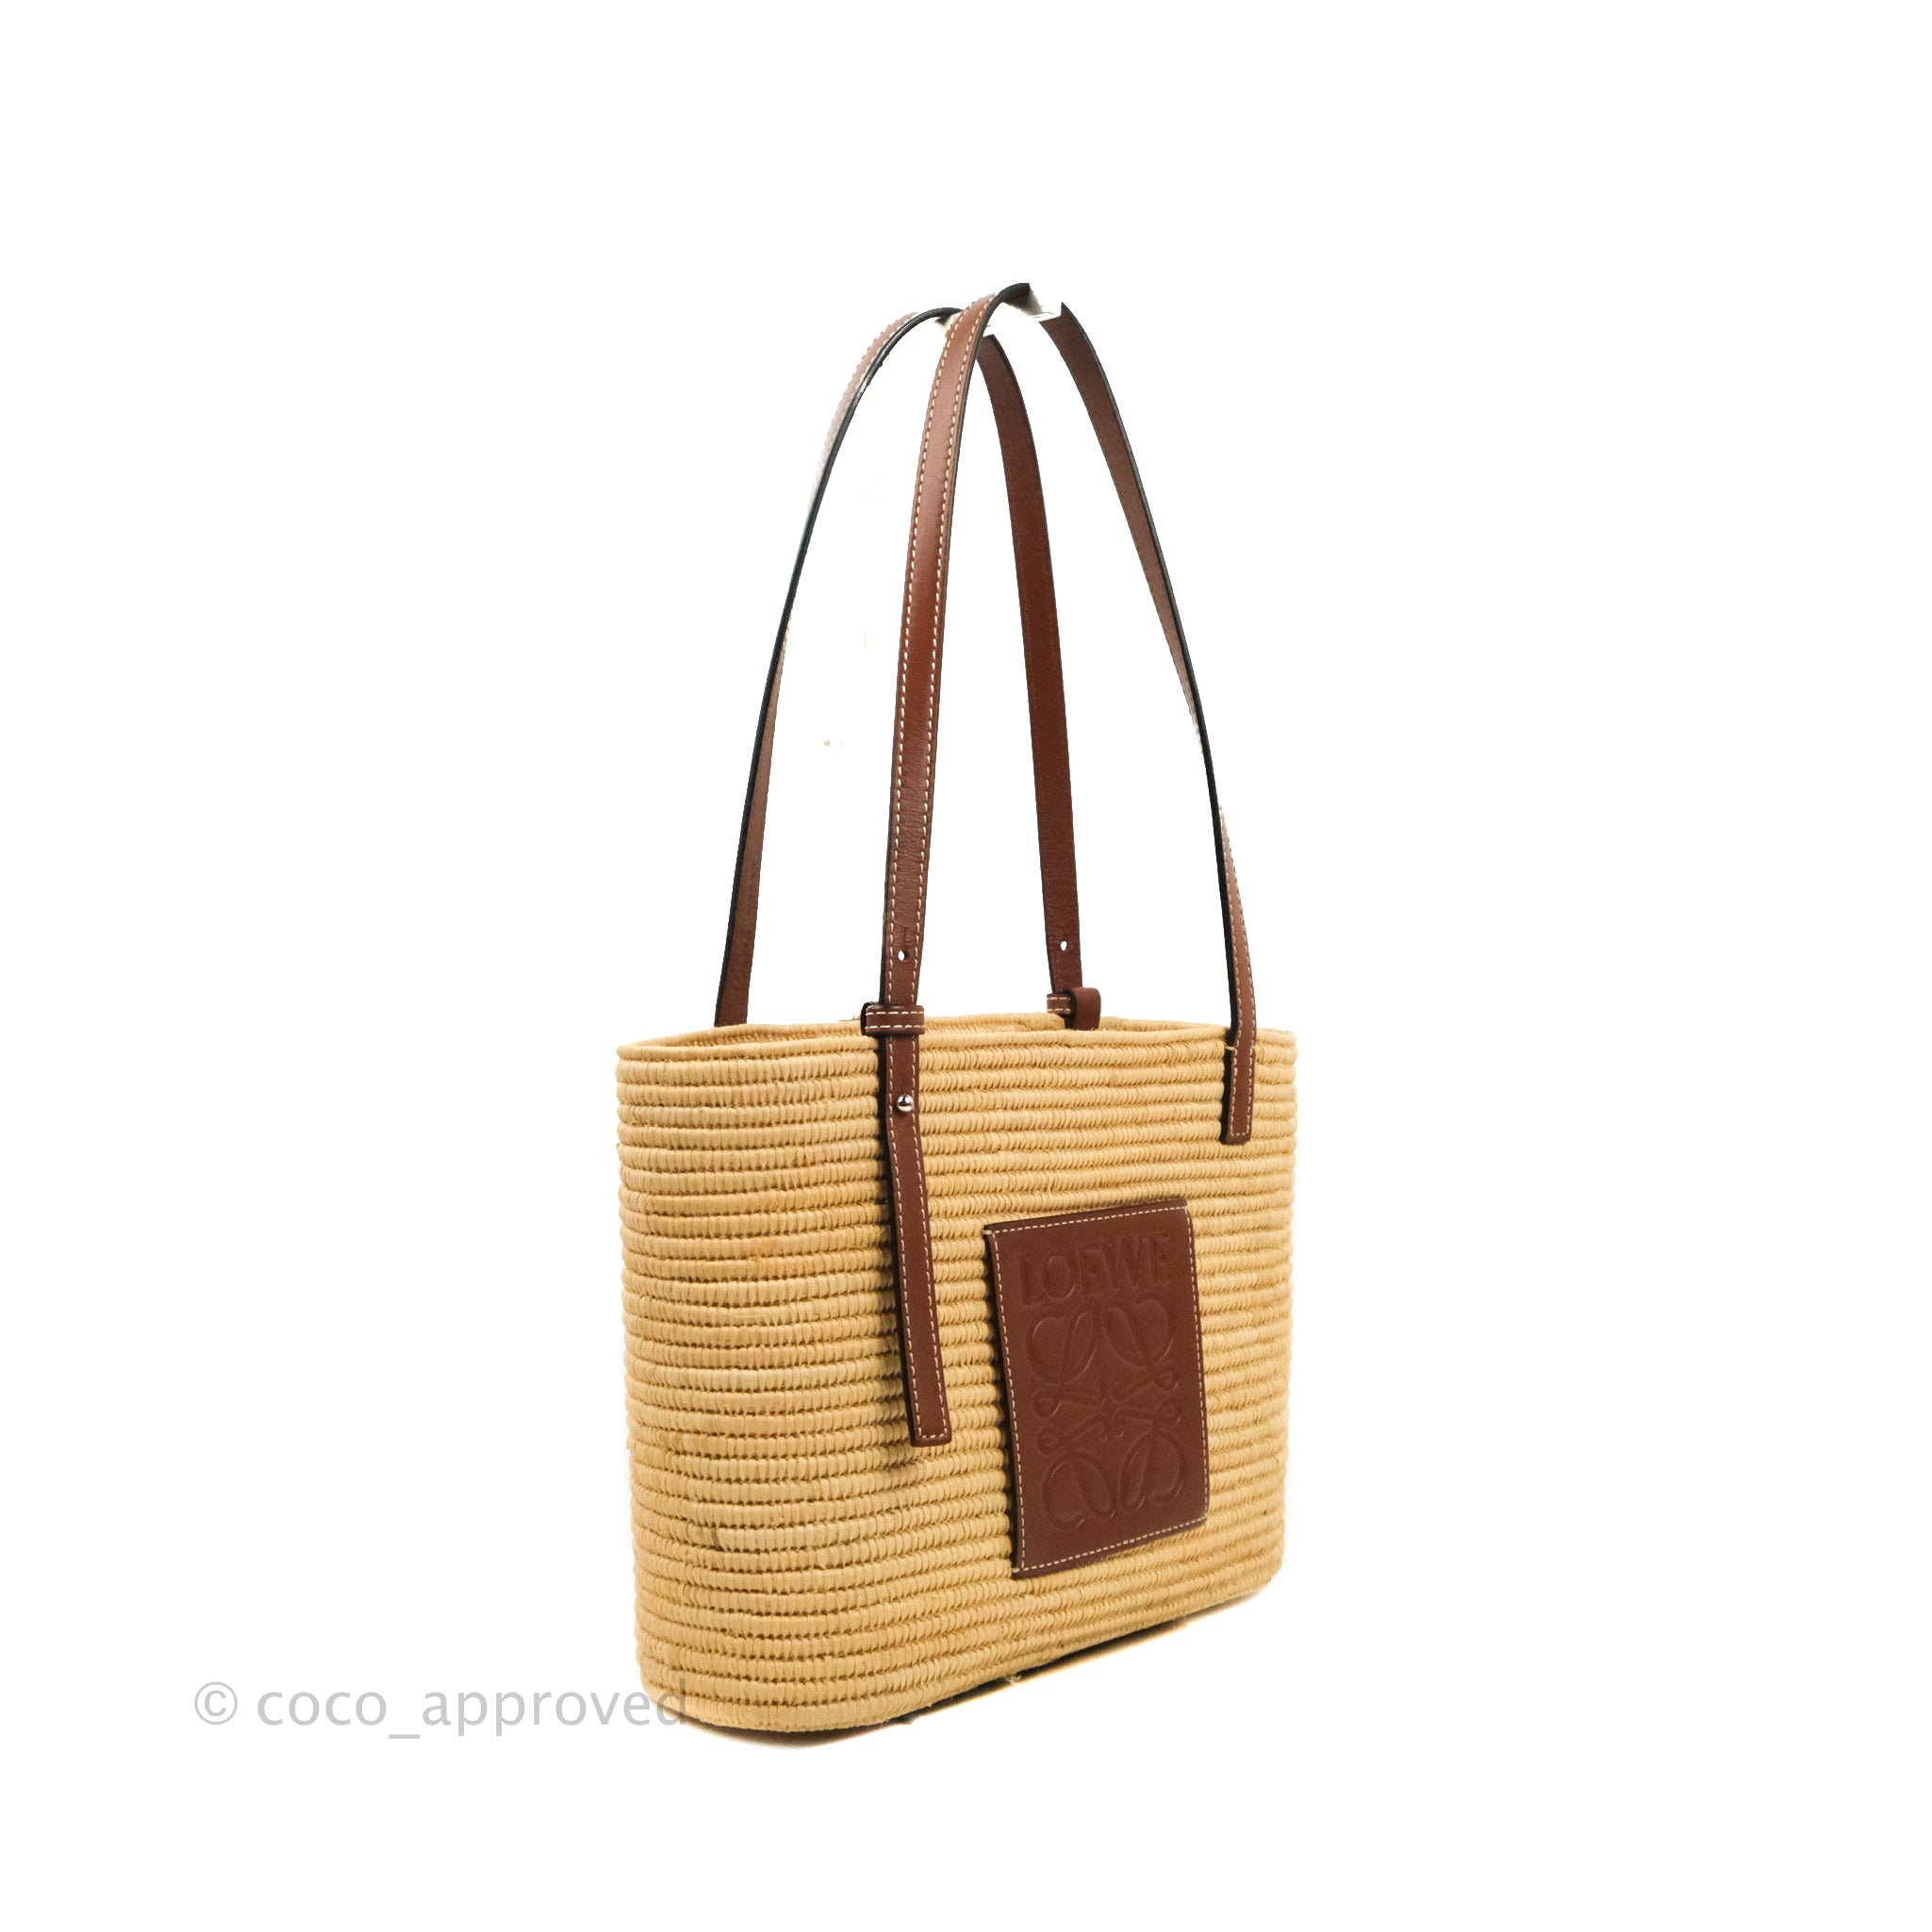 Small Square Basket bag in raffia and calfskin Natural/White - LOEWE